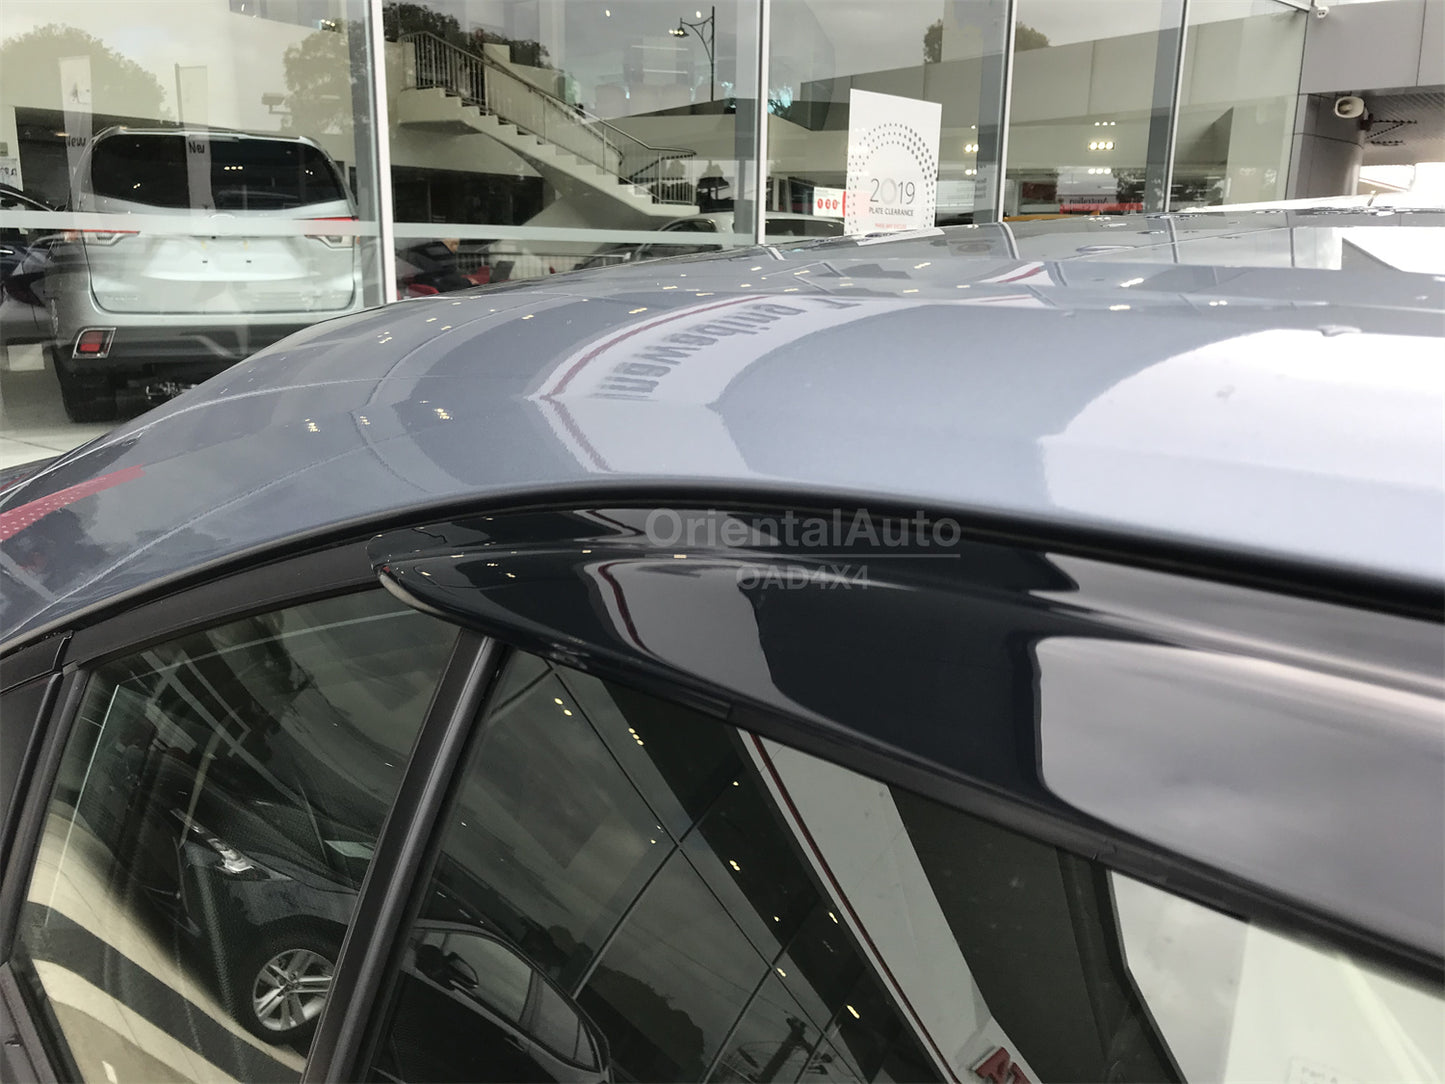 Luxury Weathershields Weather Shields Window Visor For Toyota Corolla Sedan 2019+